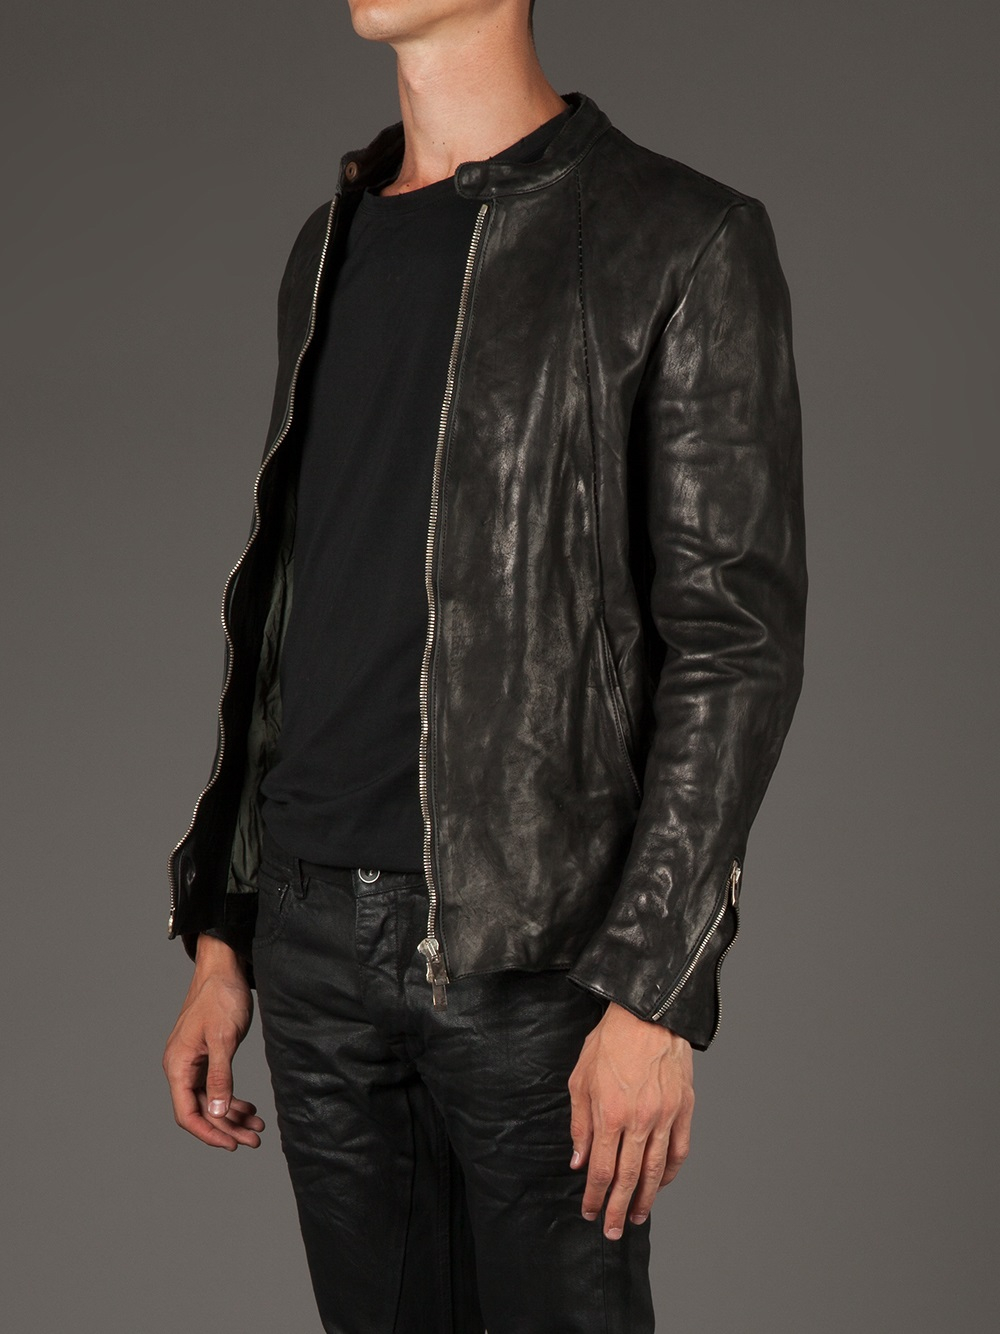 Incarnation Washed Leather Jacket in Black for Men - Lyst